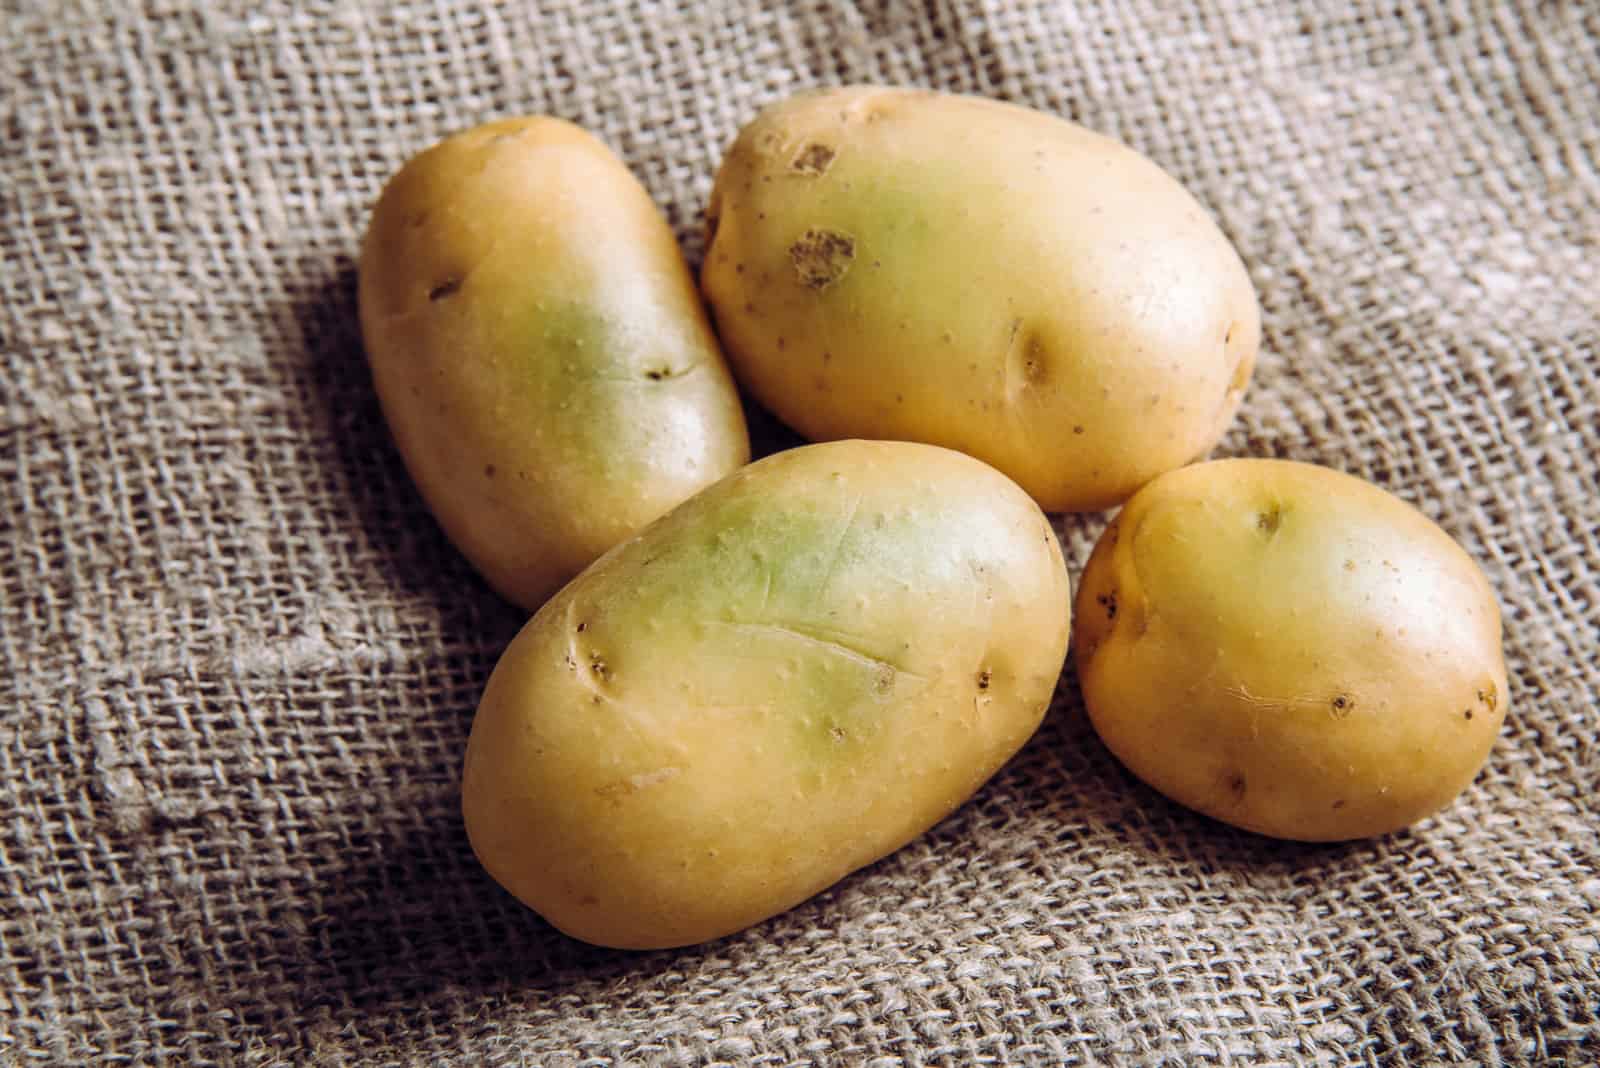 sick potatoes on a brown bag